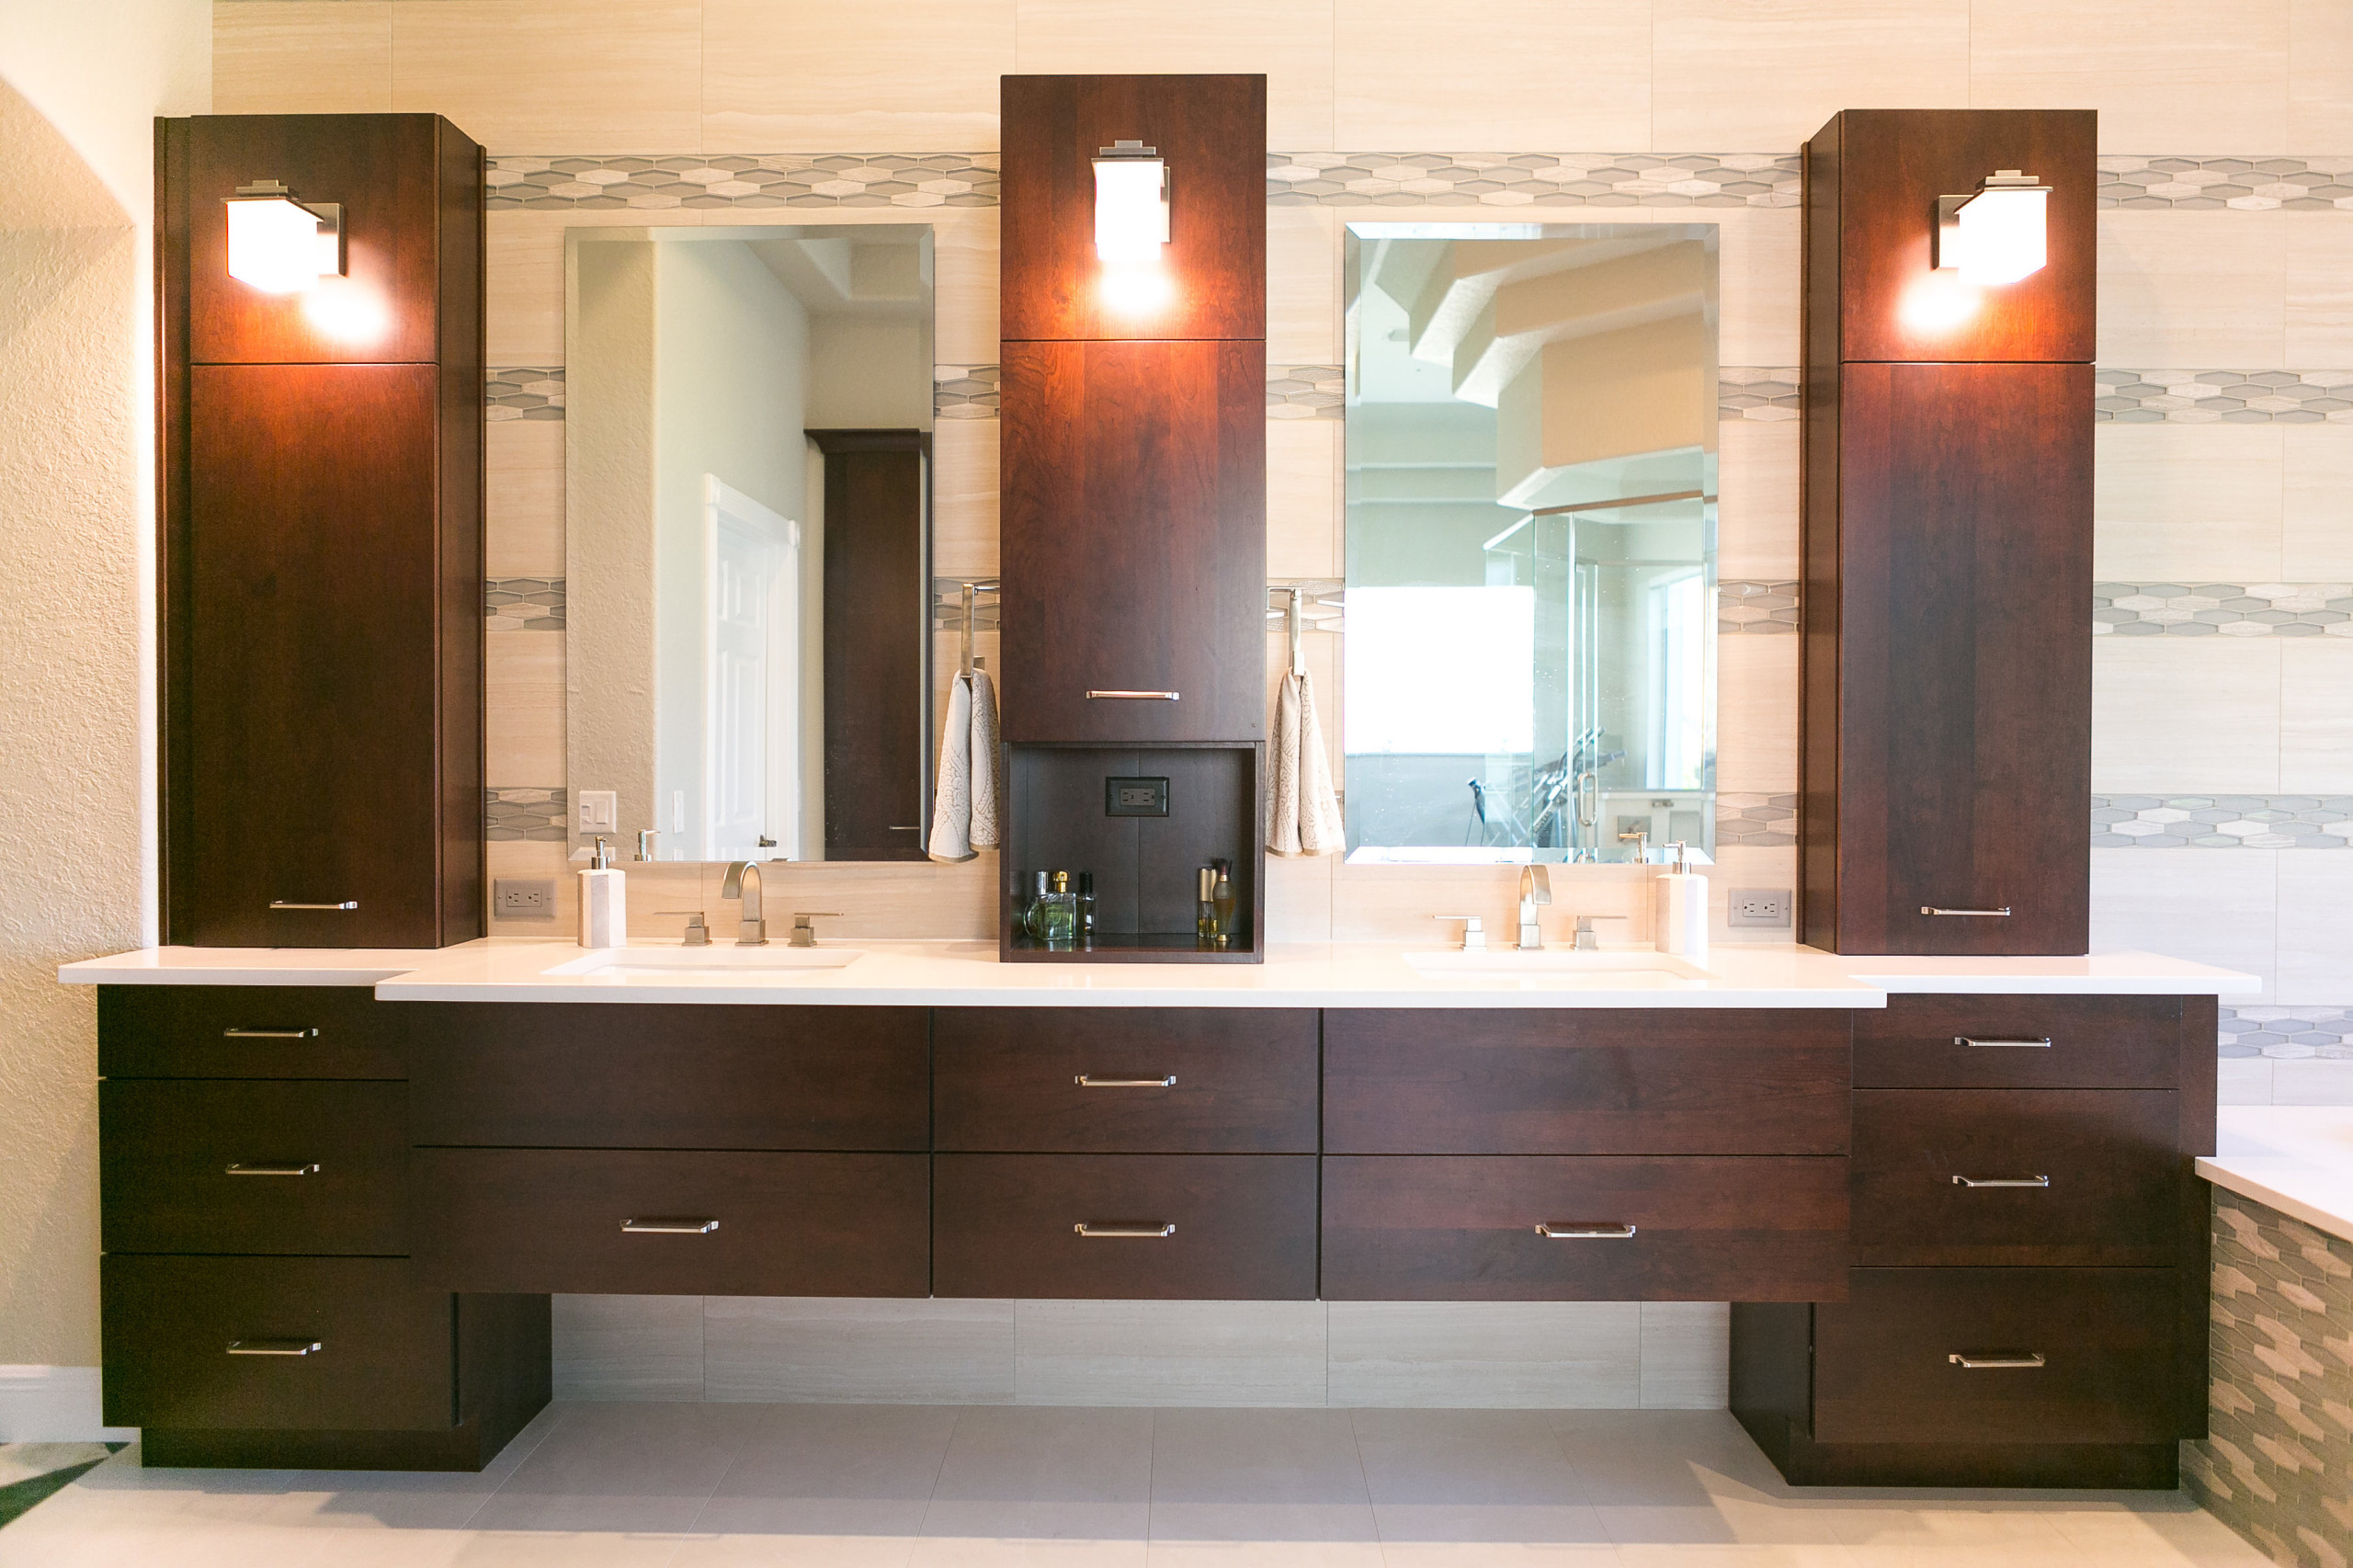 Floating Vanity In Large Master Bathroom Remodel Transitional Bathroom Orlando By Kbf Design Gallery Houzz